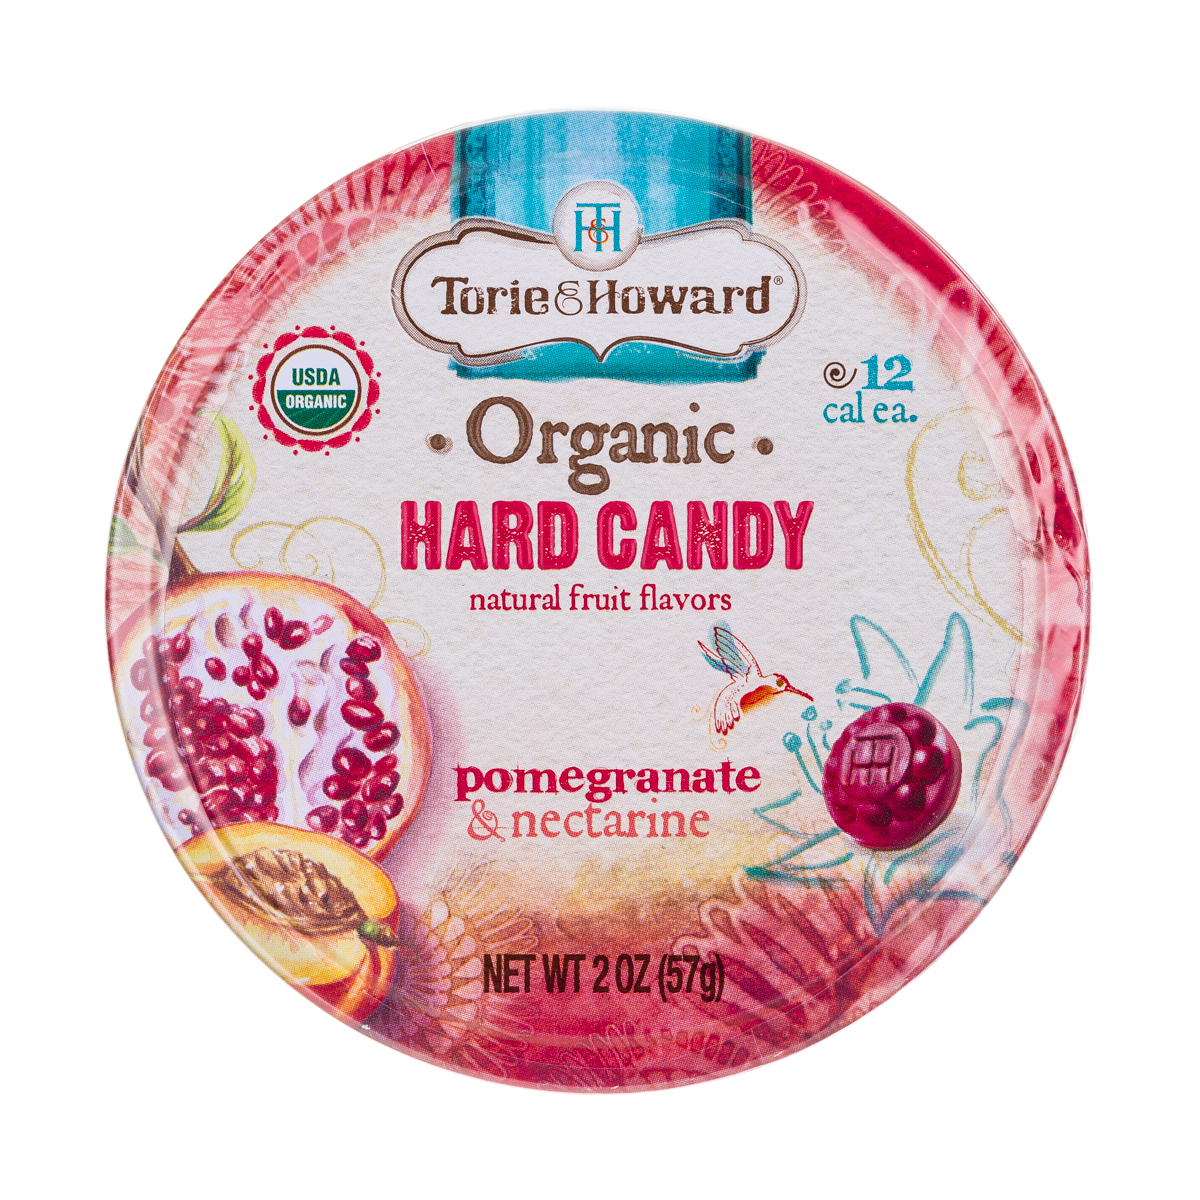 Pomegranate & Nectarine (Hard Candy)